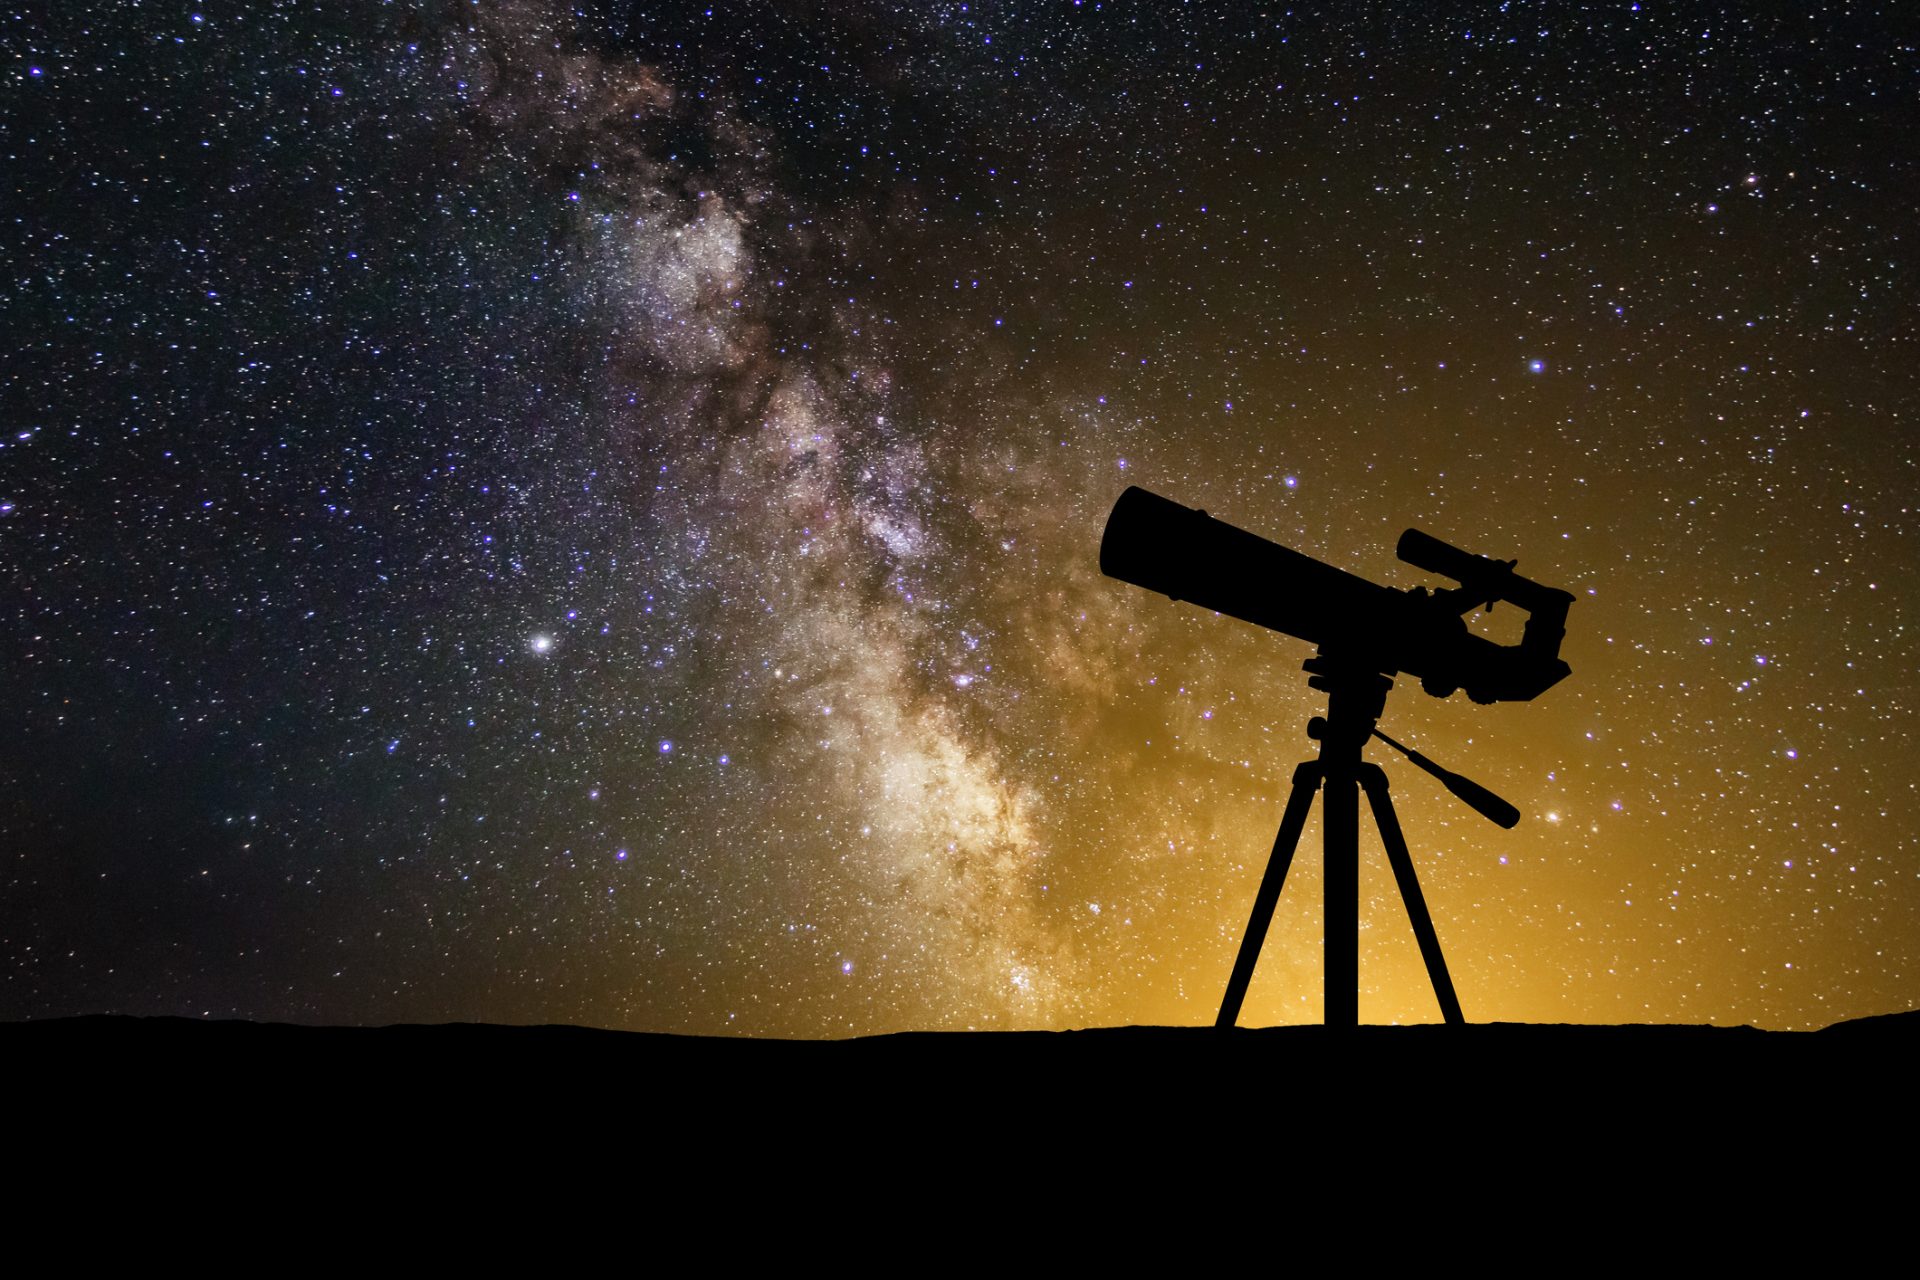 What do you need to appreciate this astronomical phenomenon?